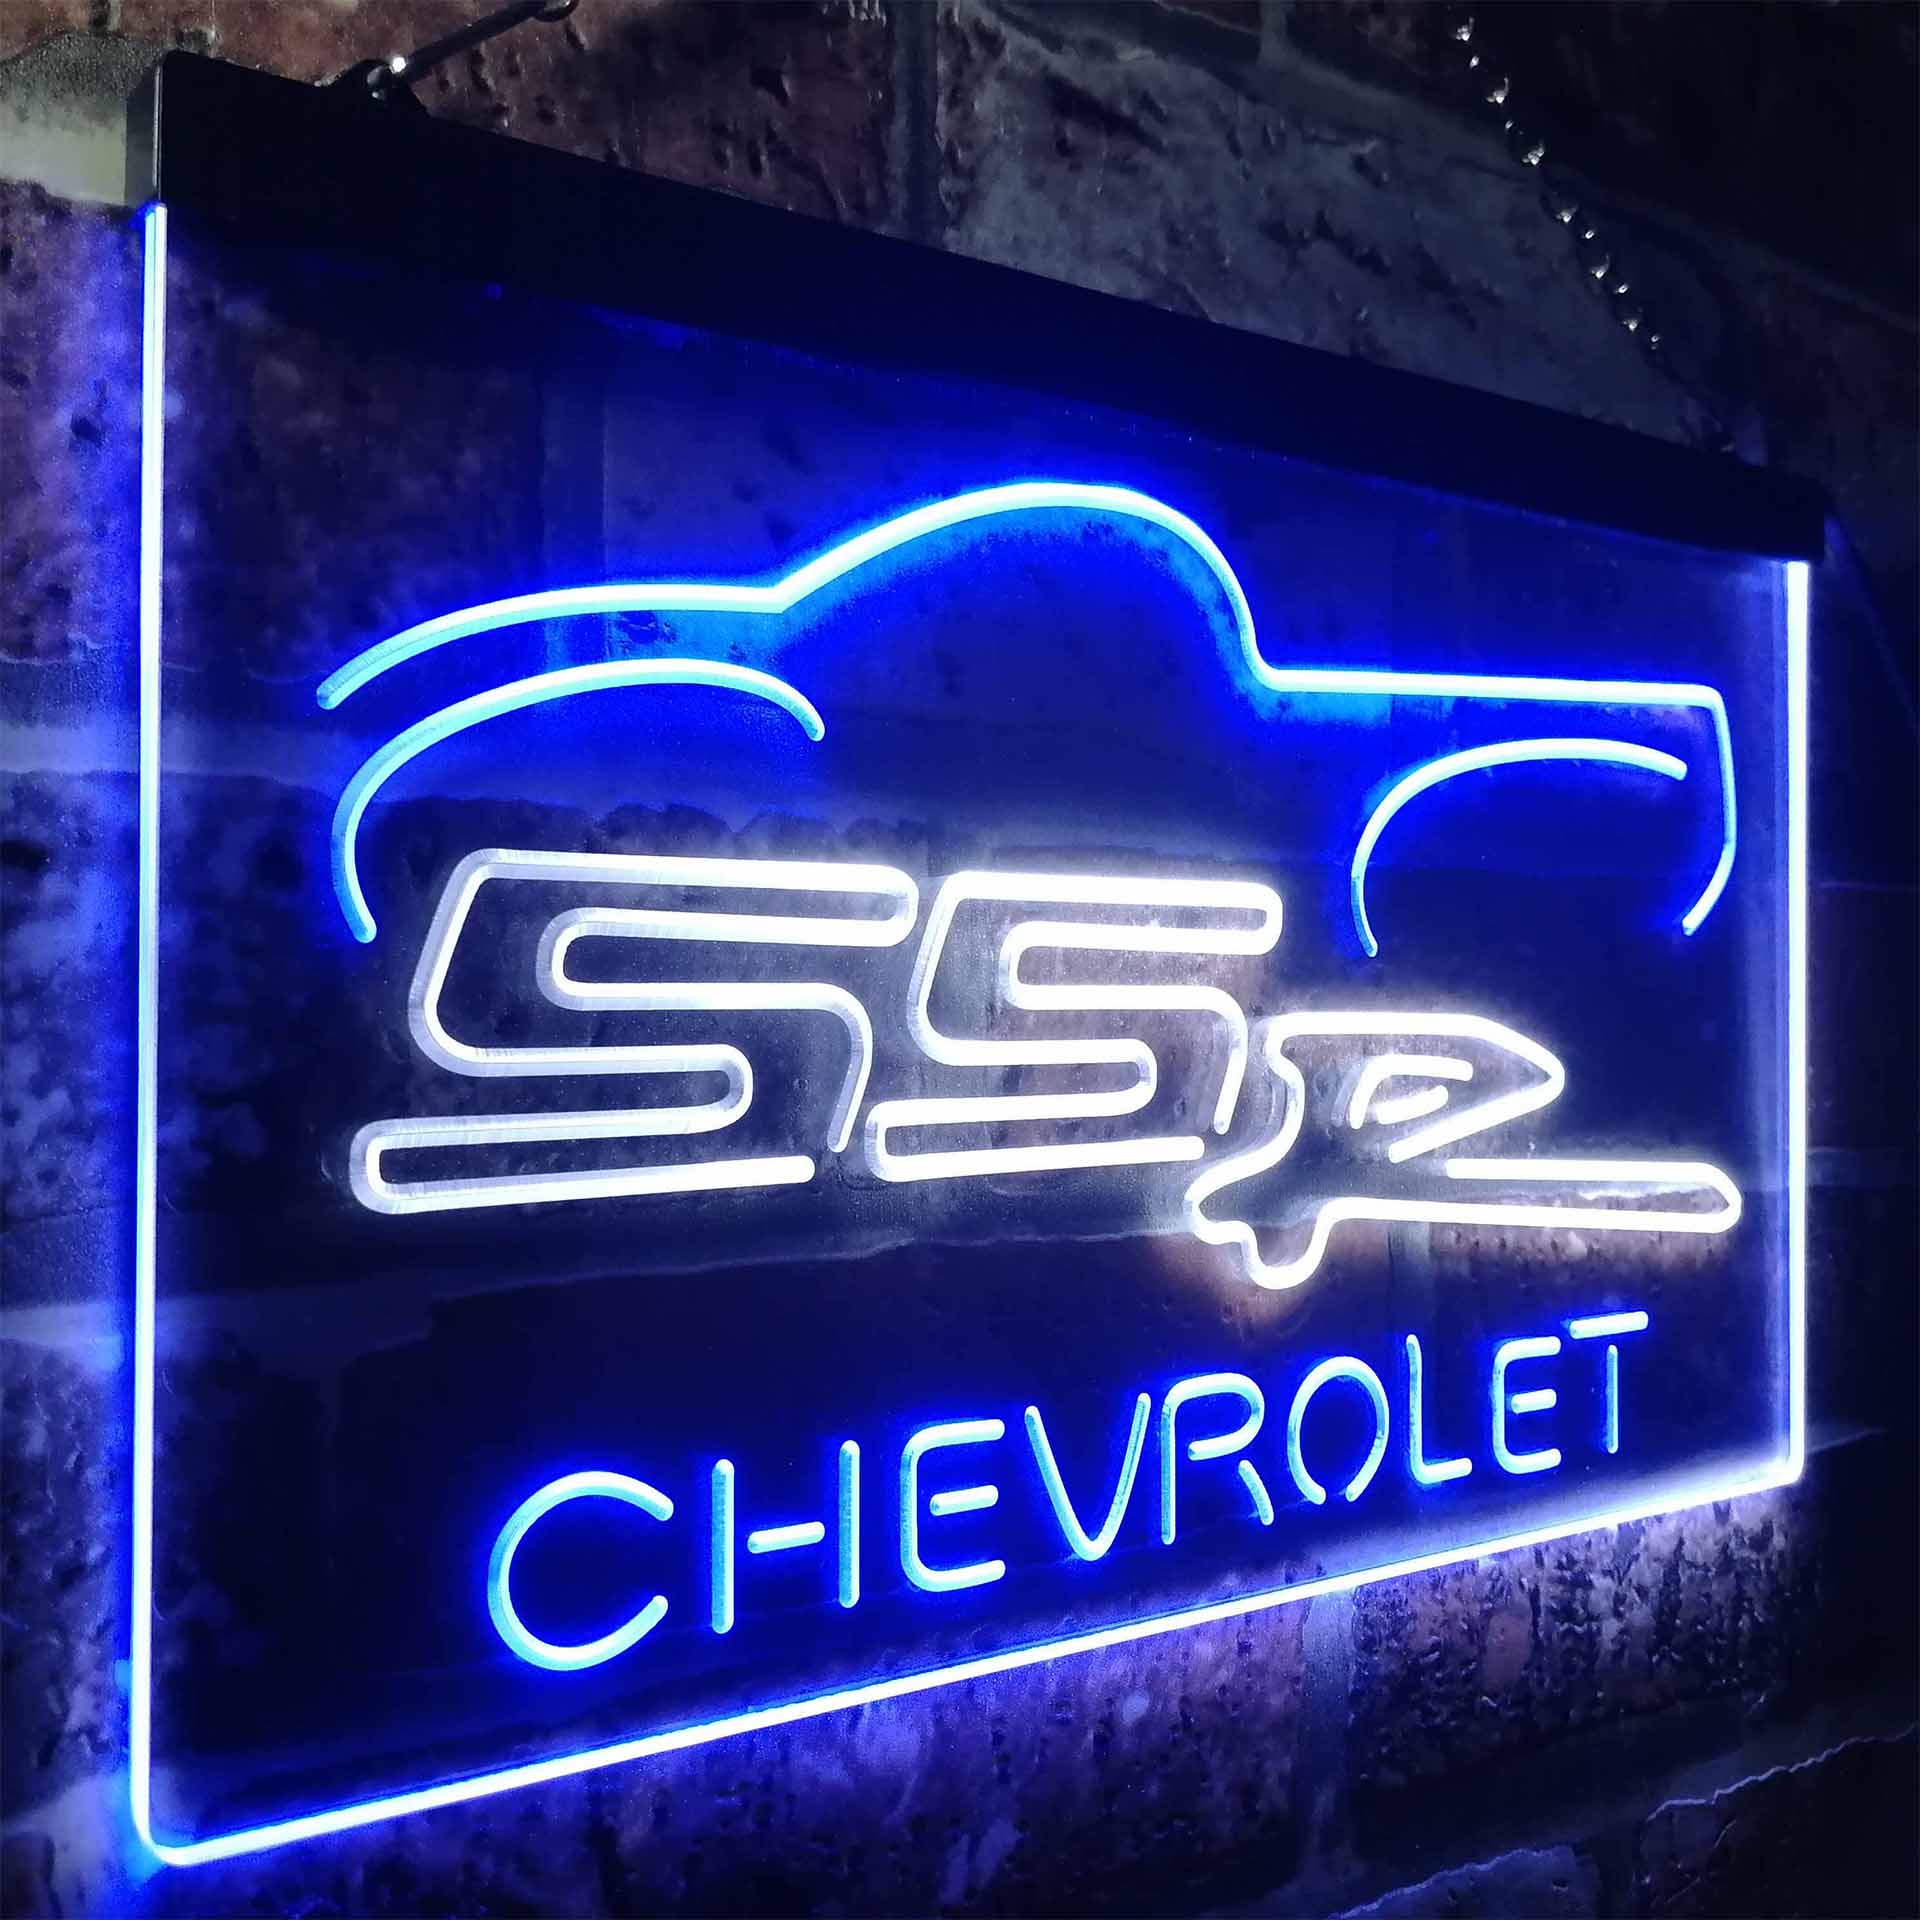 SSR Chevrolet Car LED Neon Sign